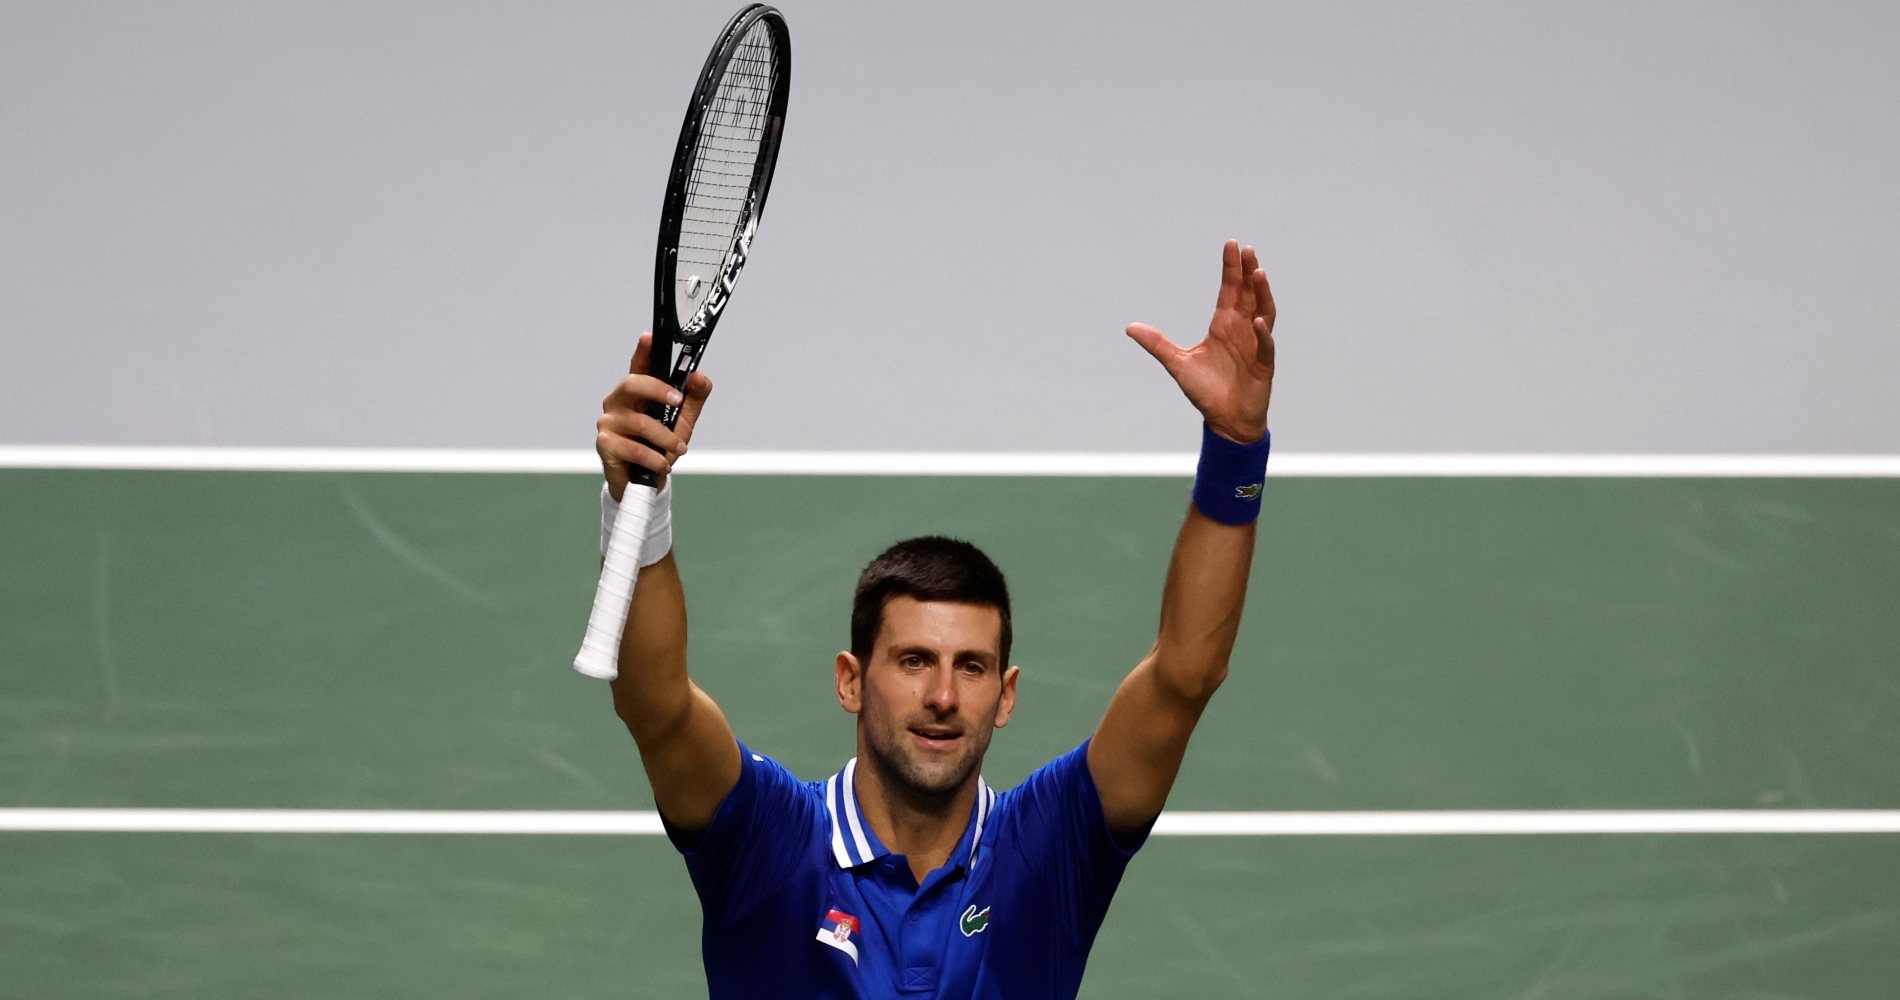 Djokovic confirms he will play Davis Cup this year - Tennis Majors